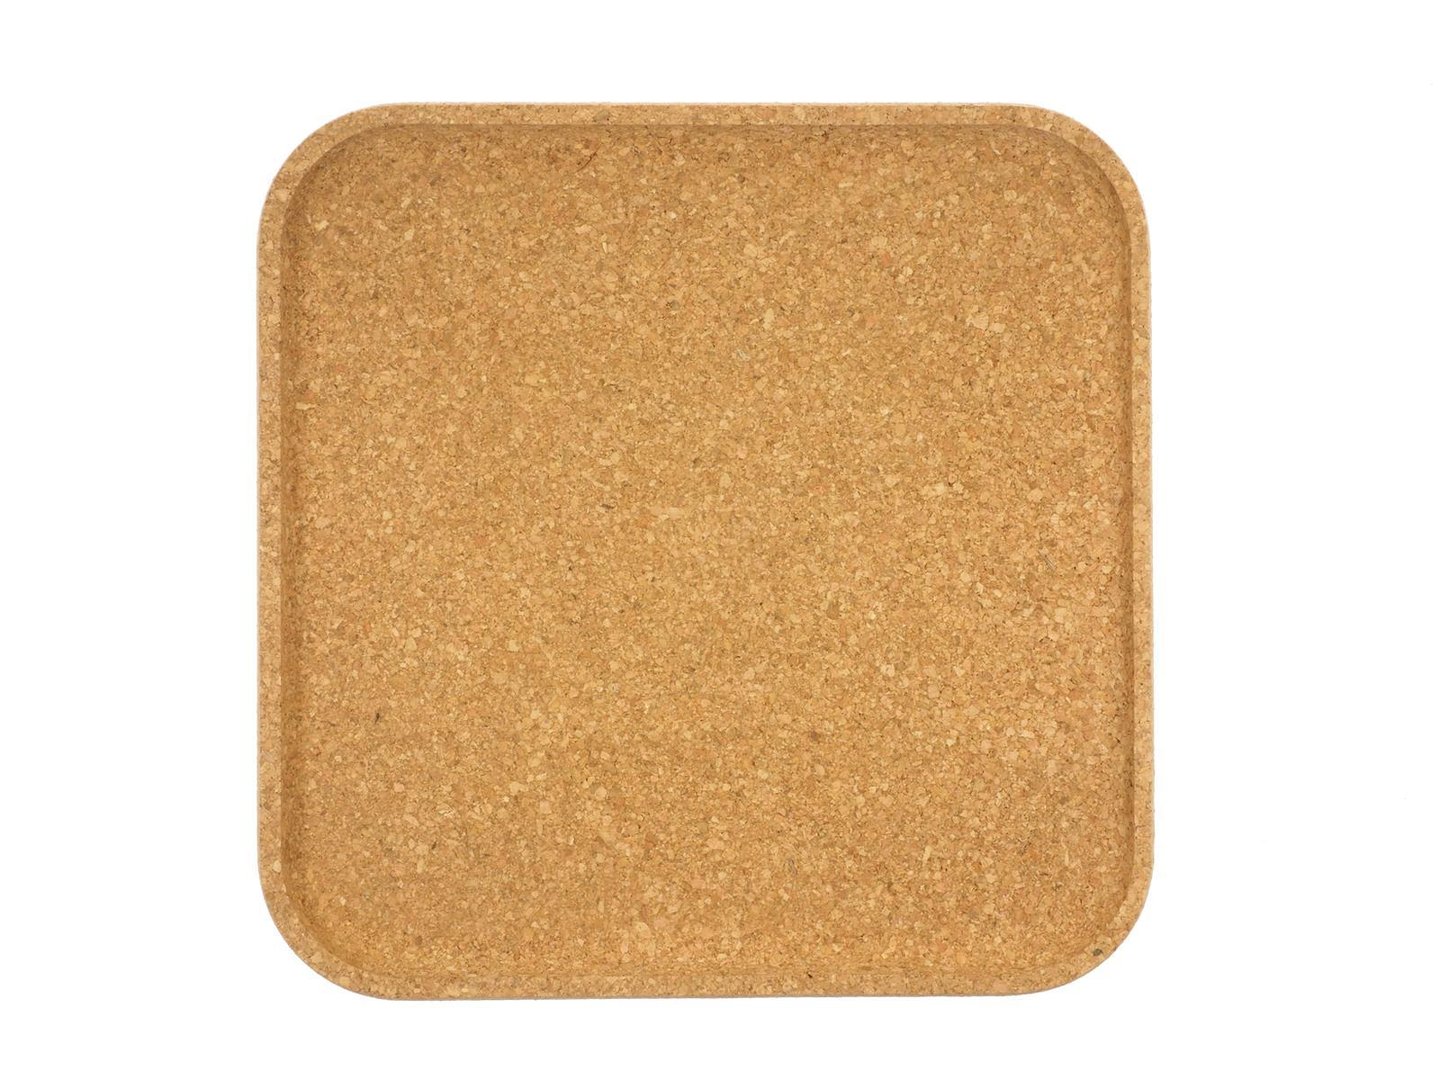 7820 Sturdy cork tray square 6